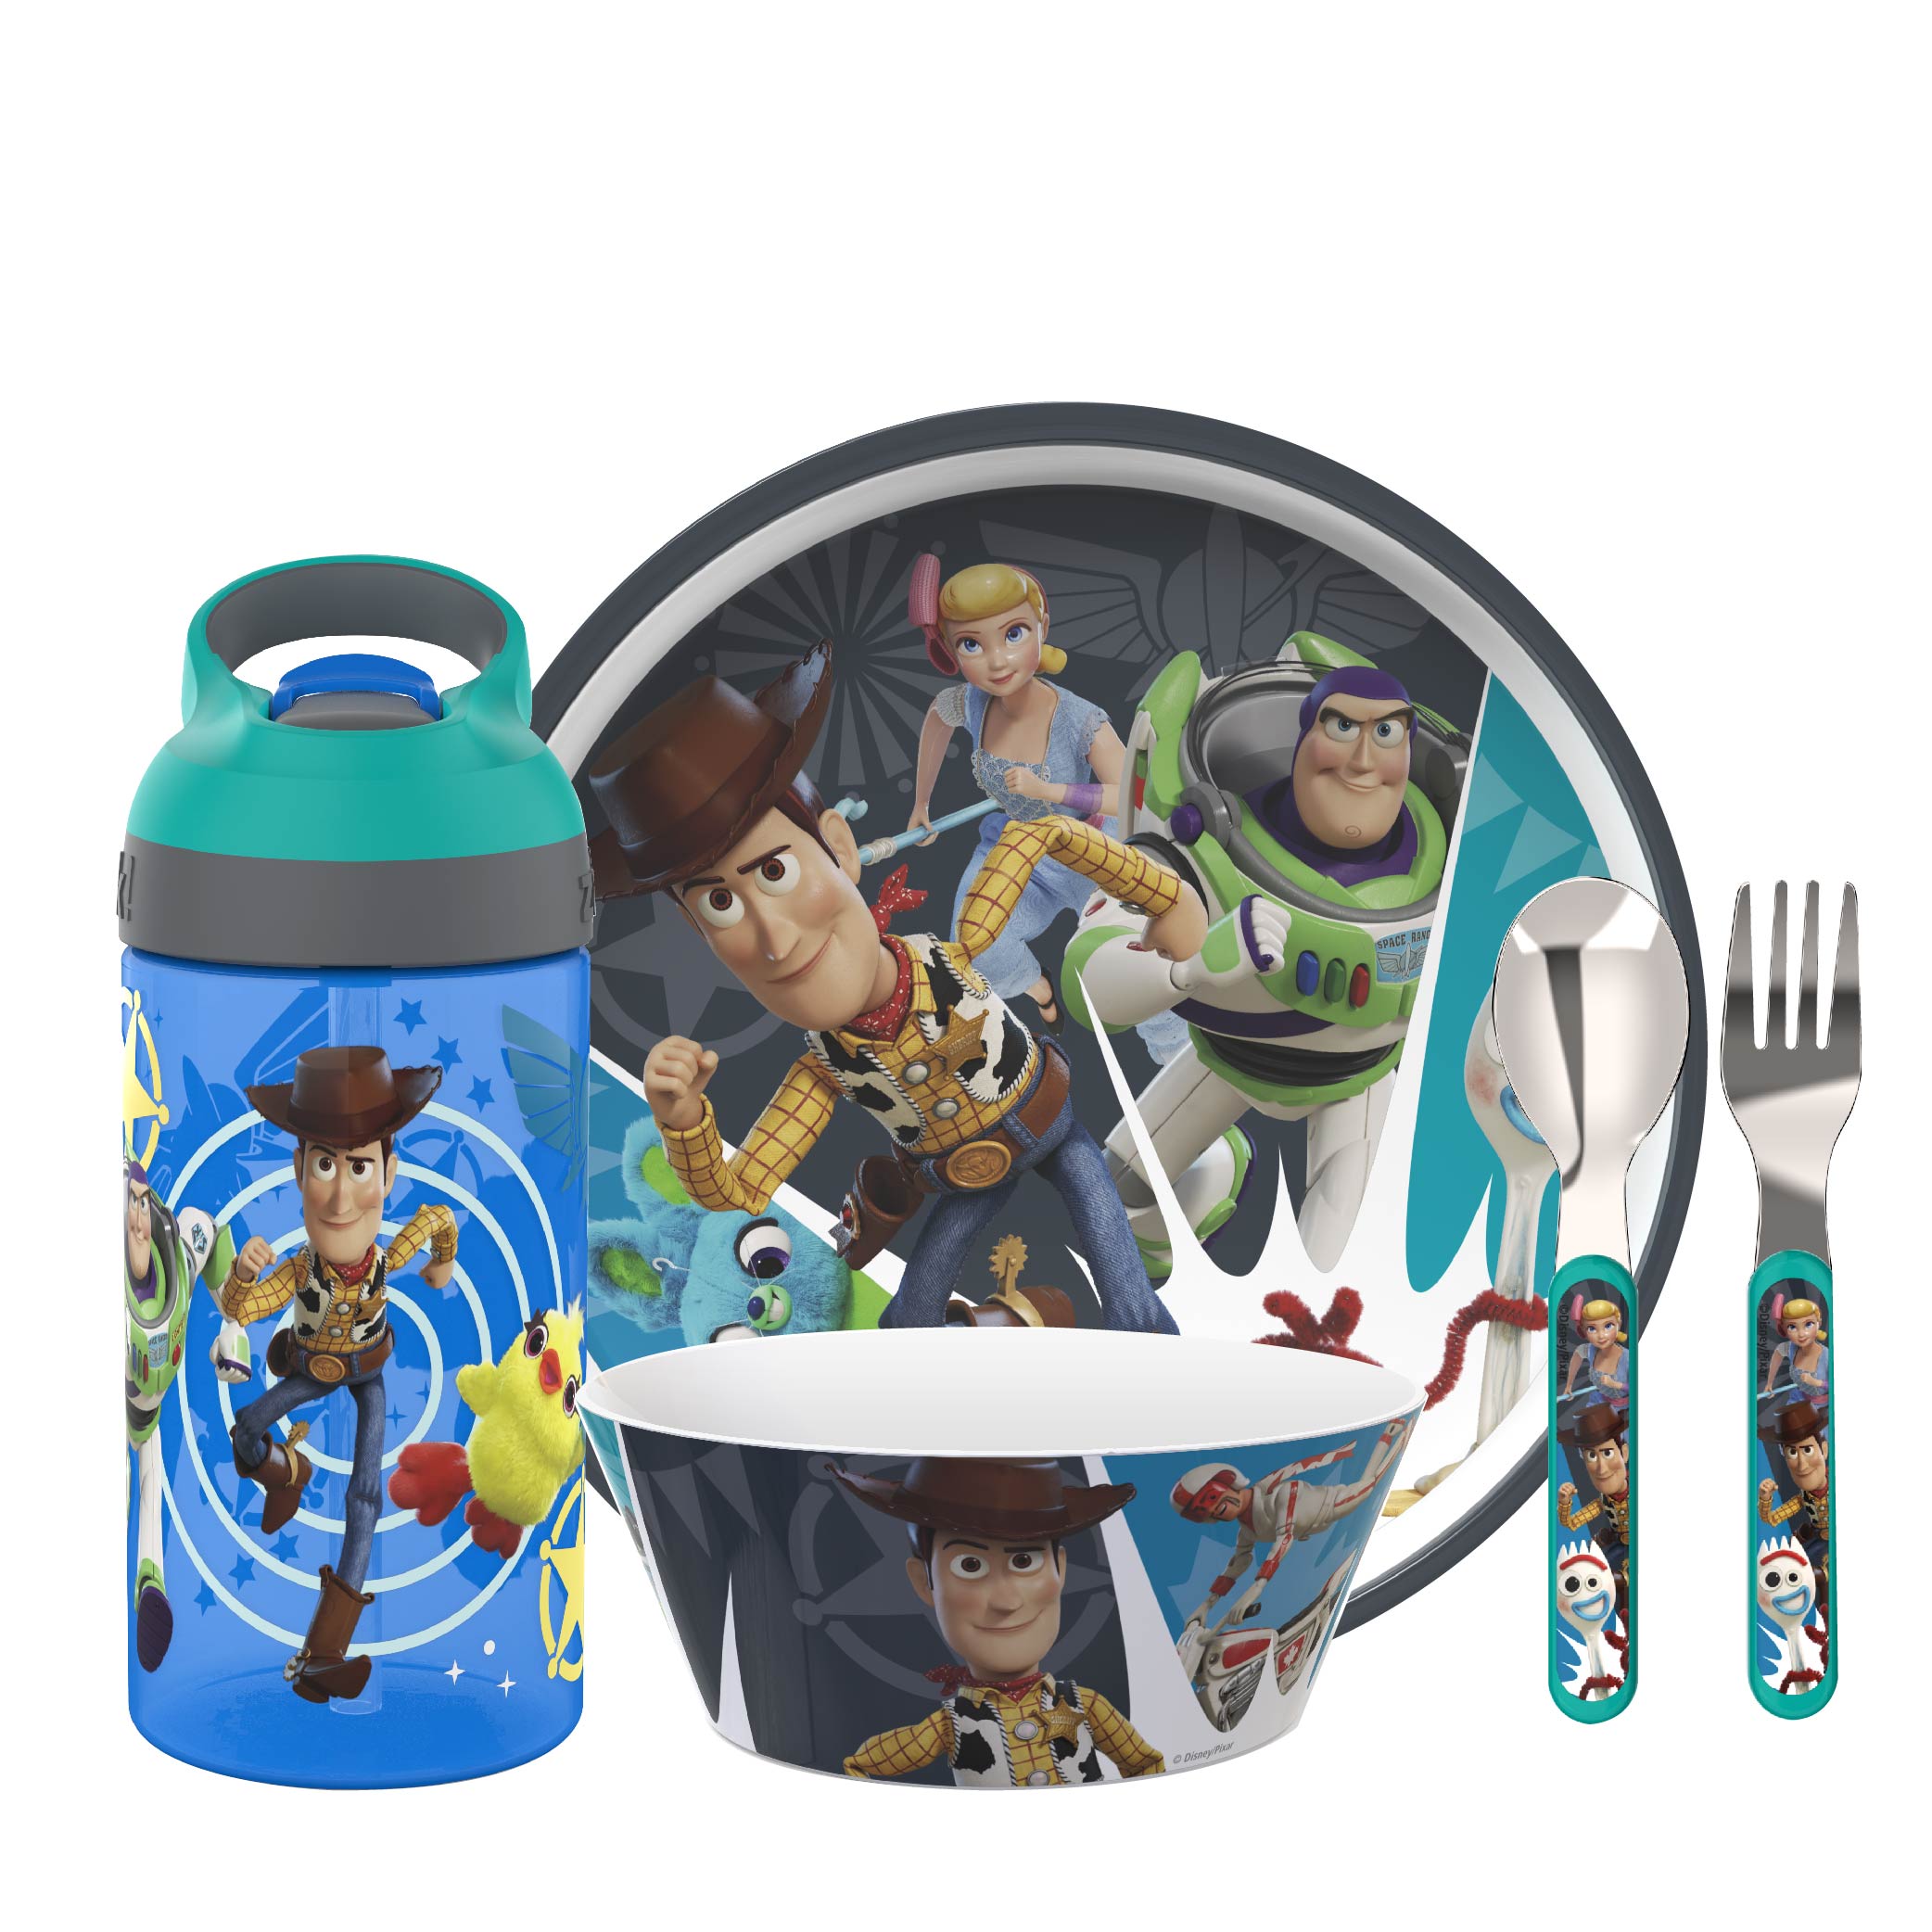 Disney Pixar Toy Story 4 Movie Dinnerware Set, Woody, Buzz and Friends, 5-piece set slideshow image 1